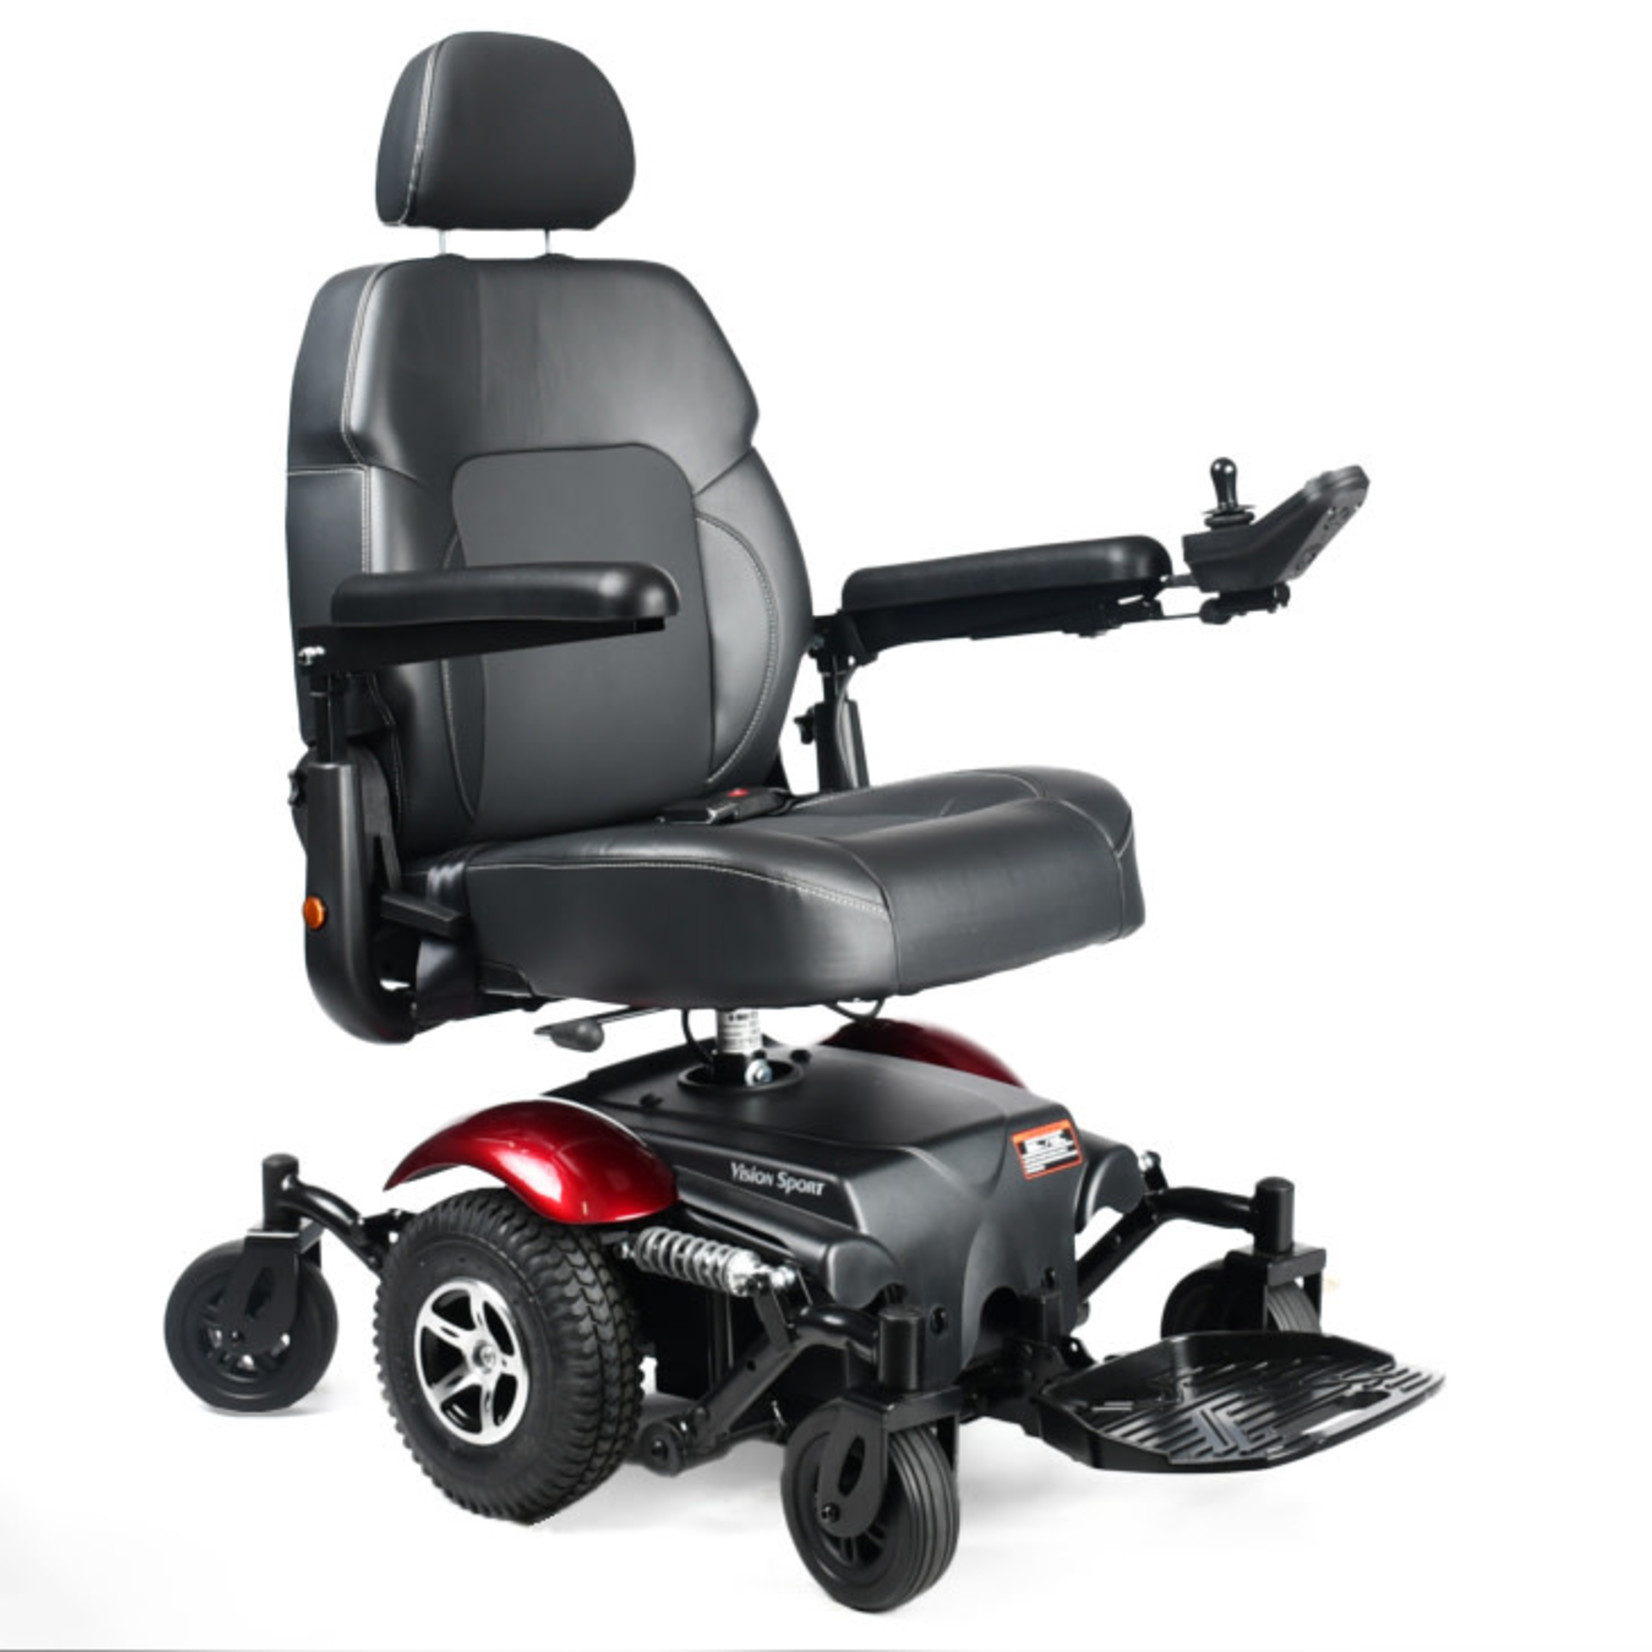 Merits Vision Sport P326 Full Size Power Chair